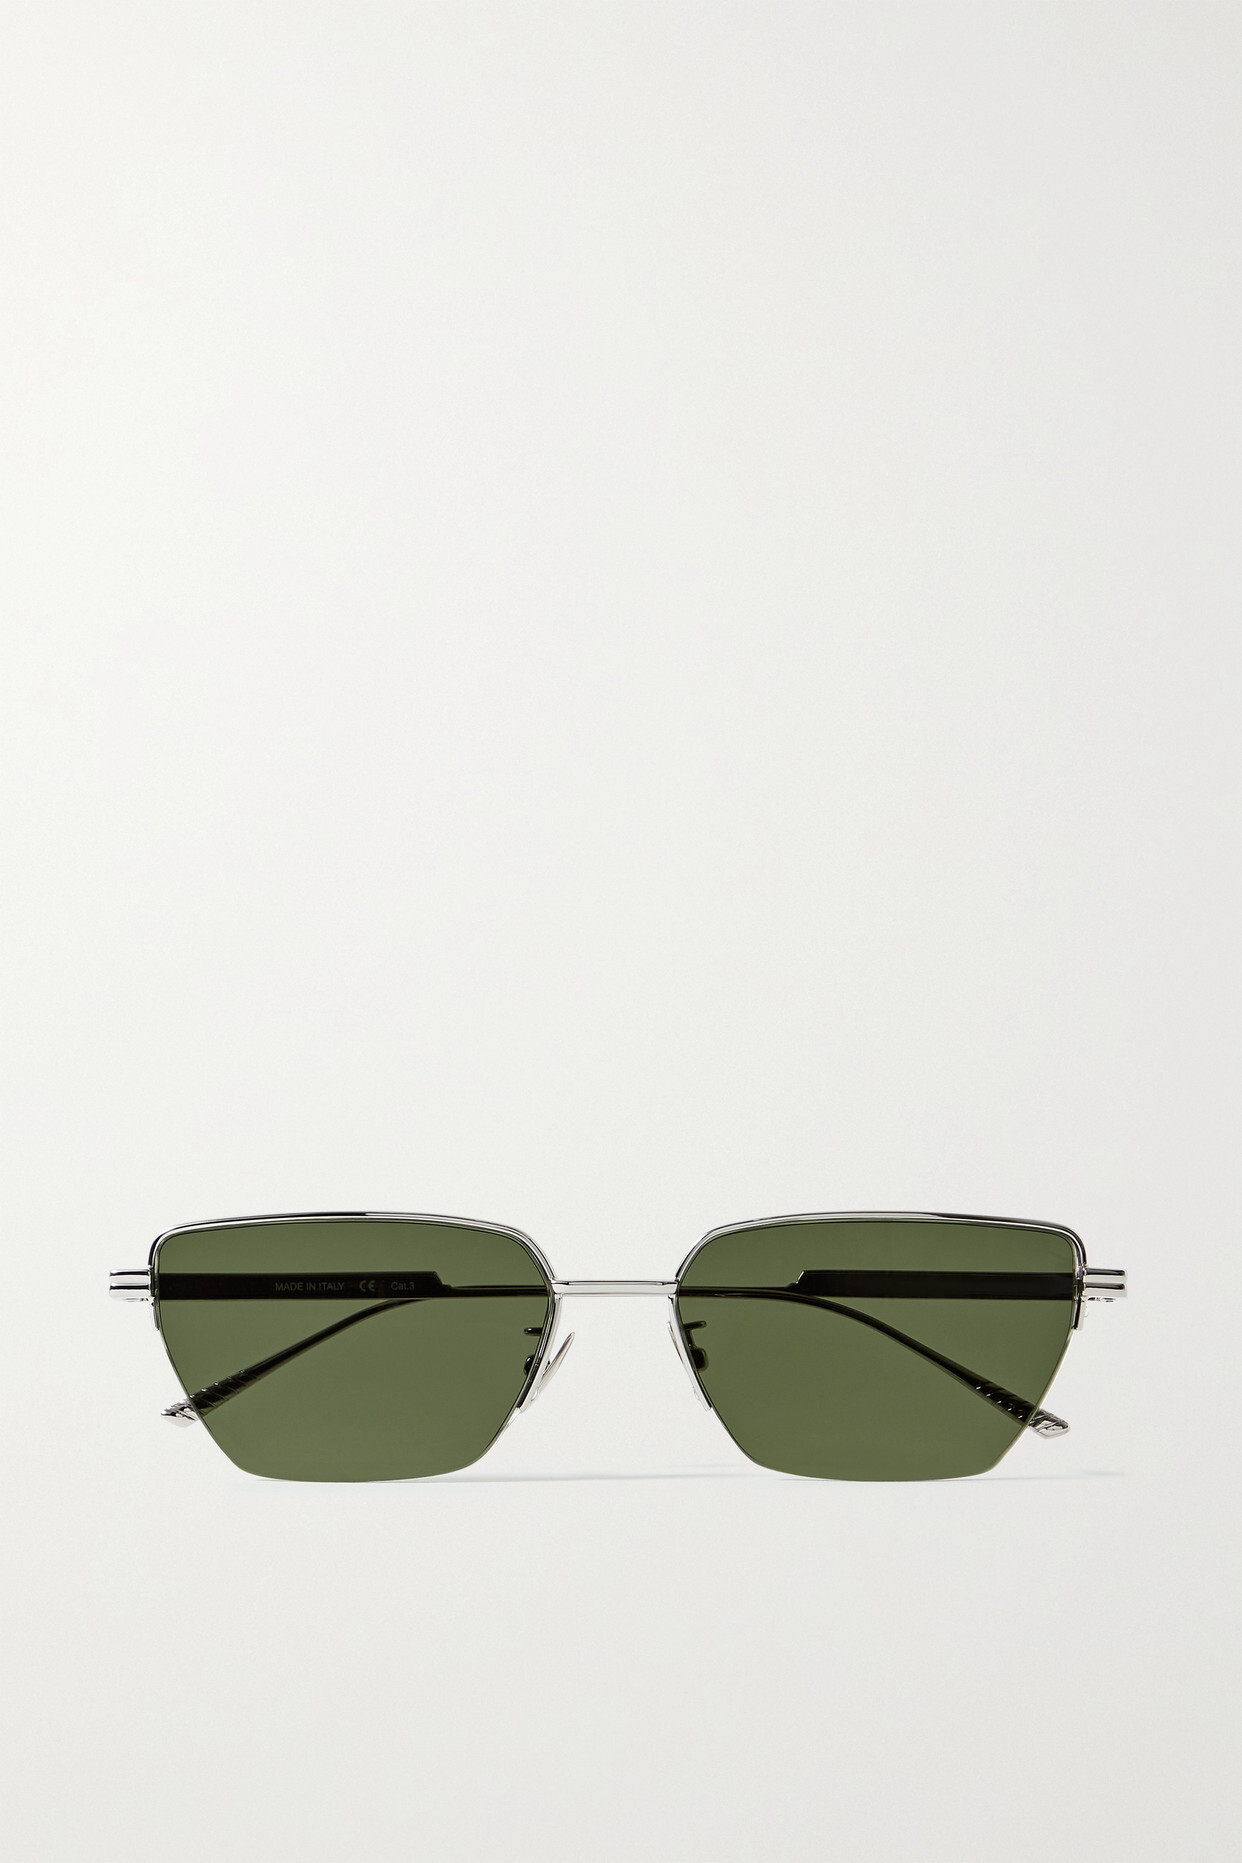 Bottega Veneta Eyewear - Cat-eye Silver-tone Sunglasses - One size